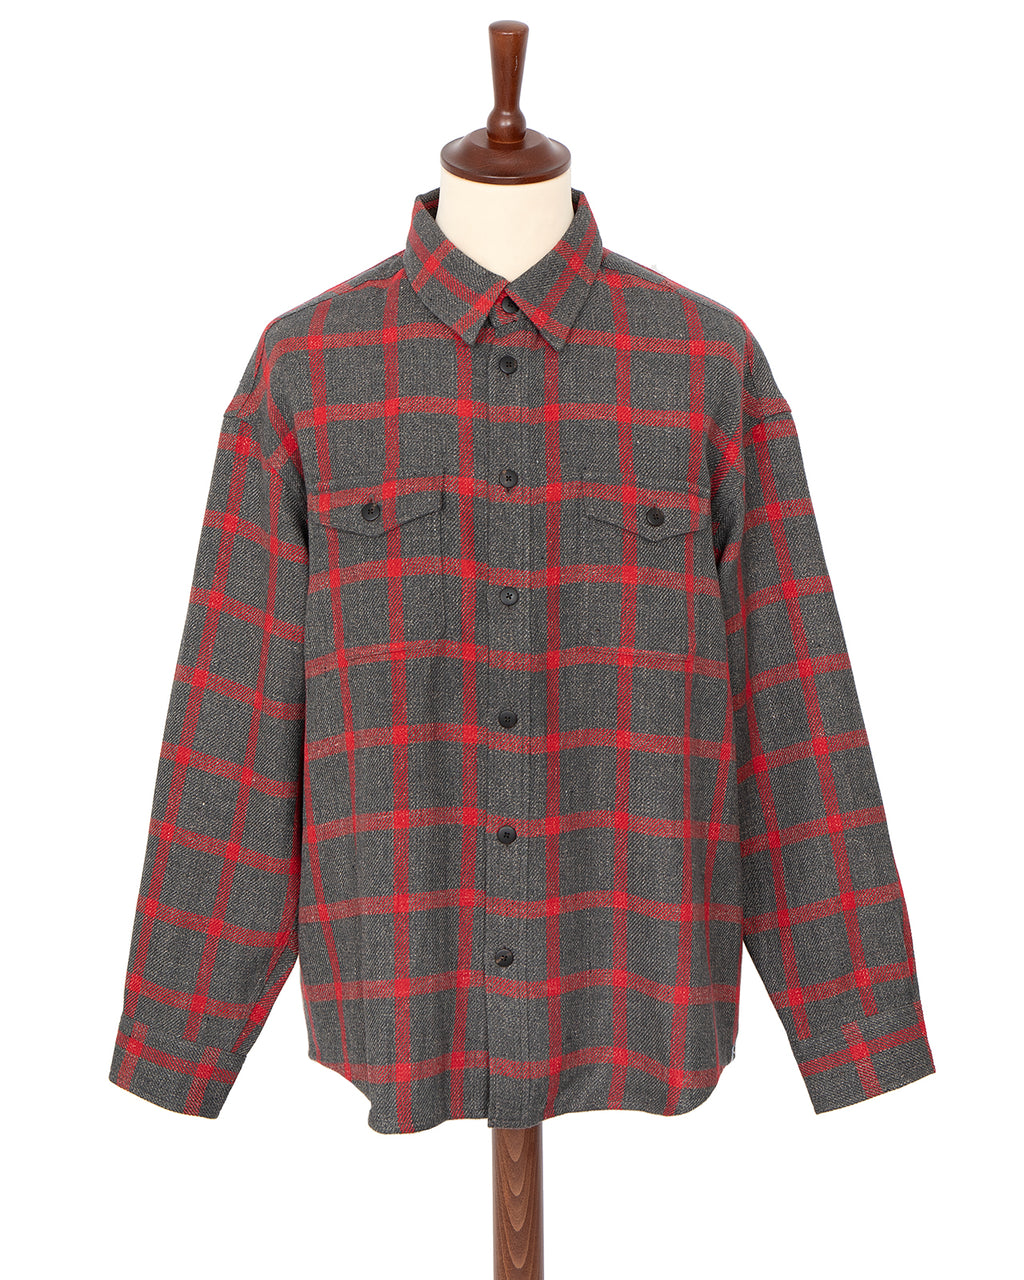 Visvim Lumber Shirt L/S, Charcoal